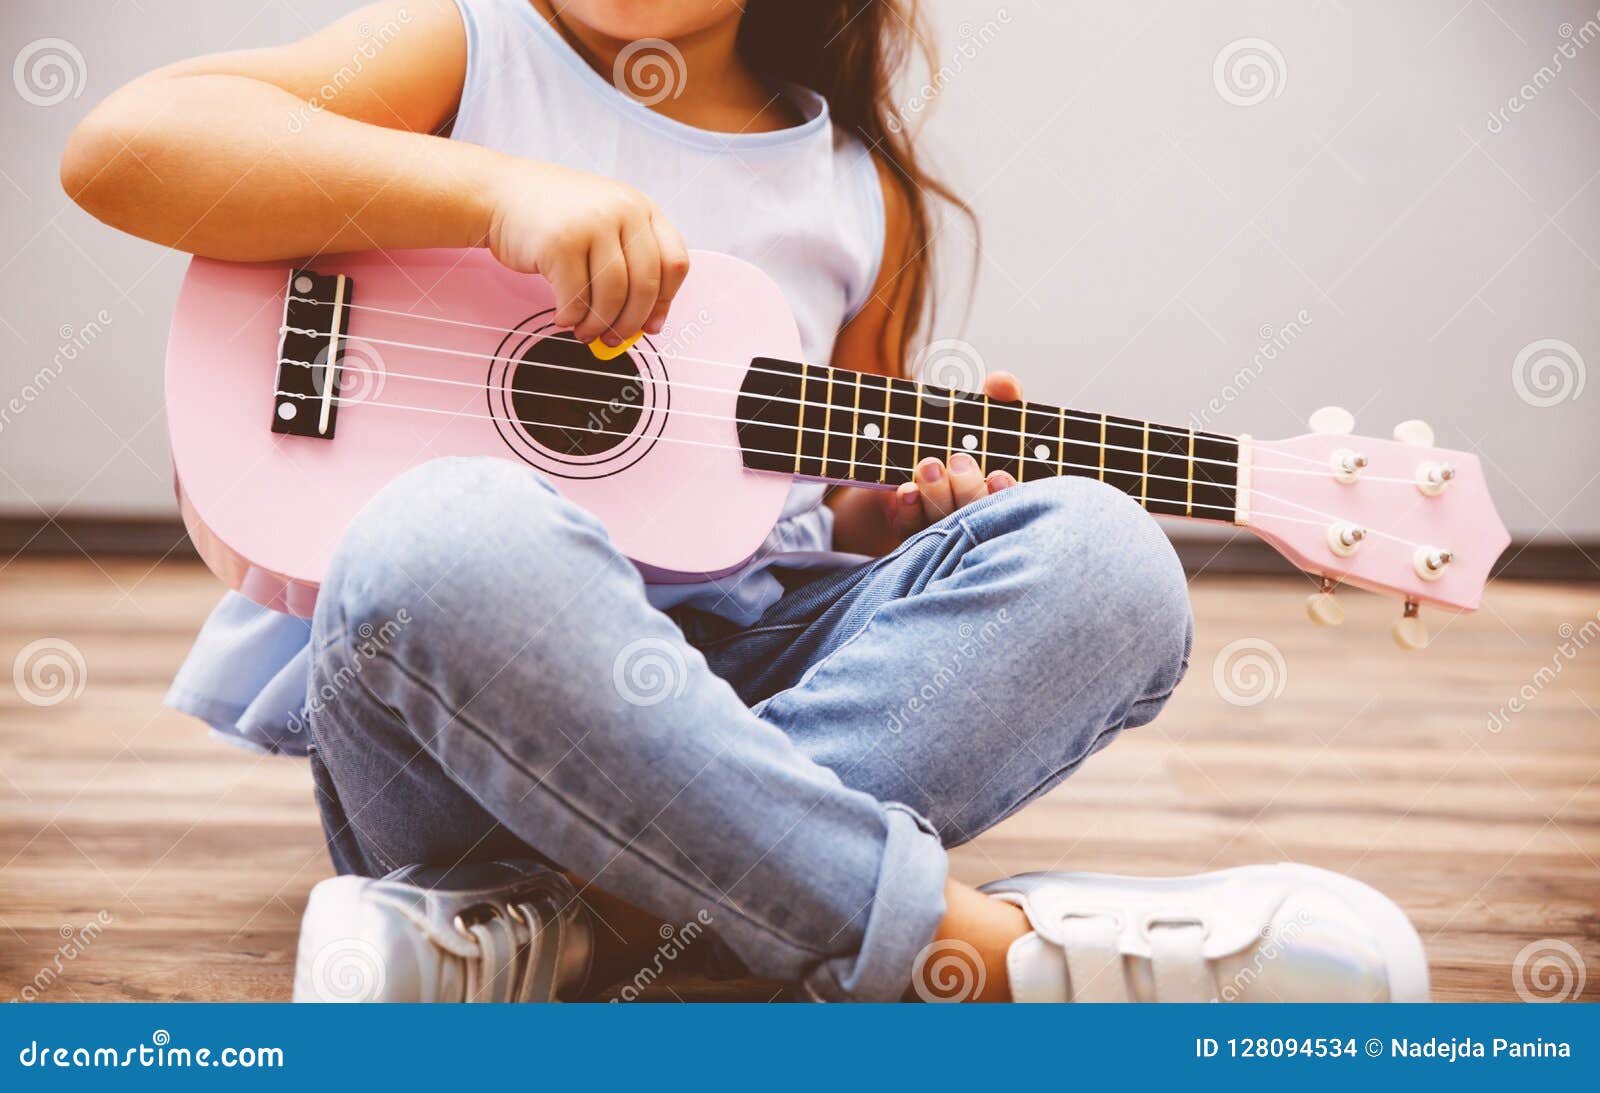 cute little girl playing pink ukulele sitting on floor